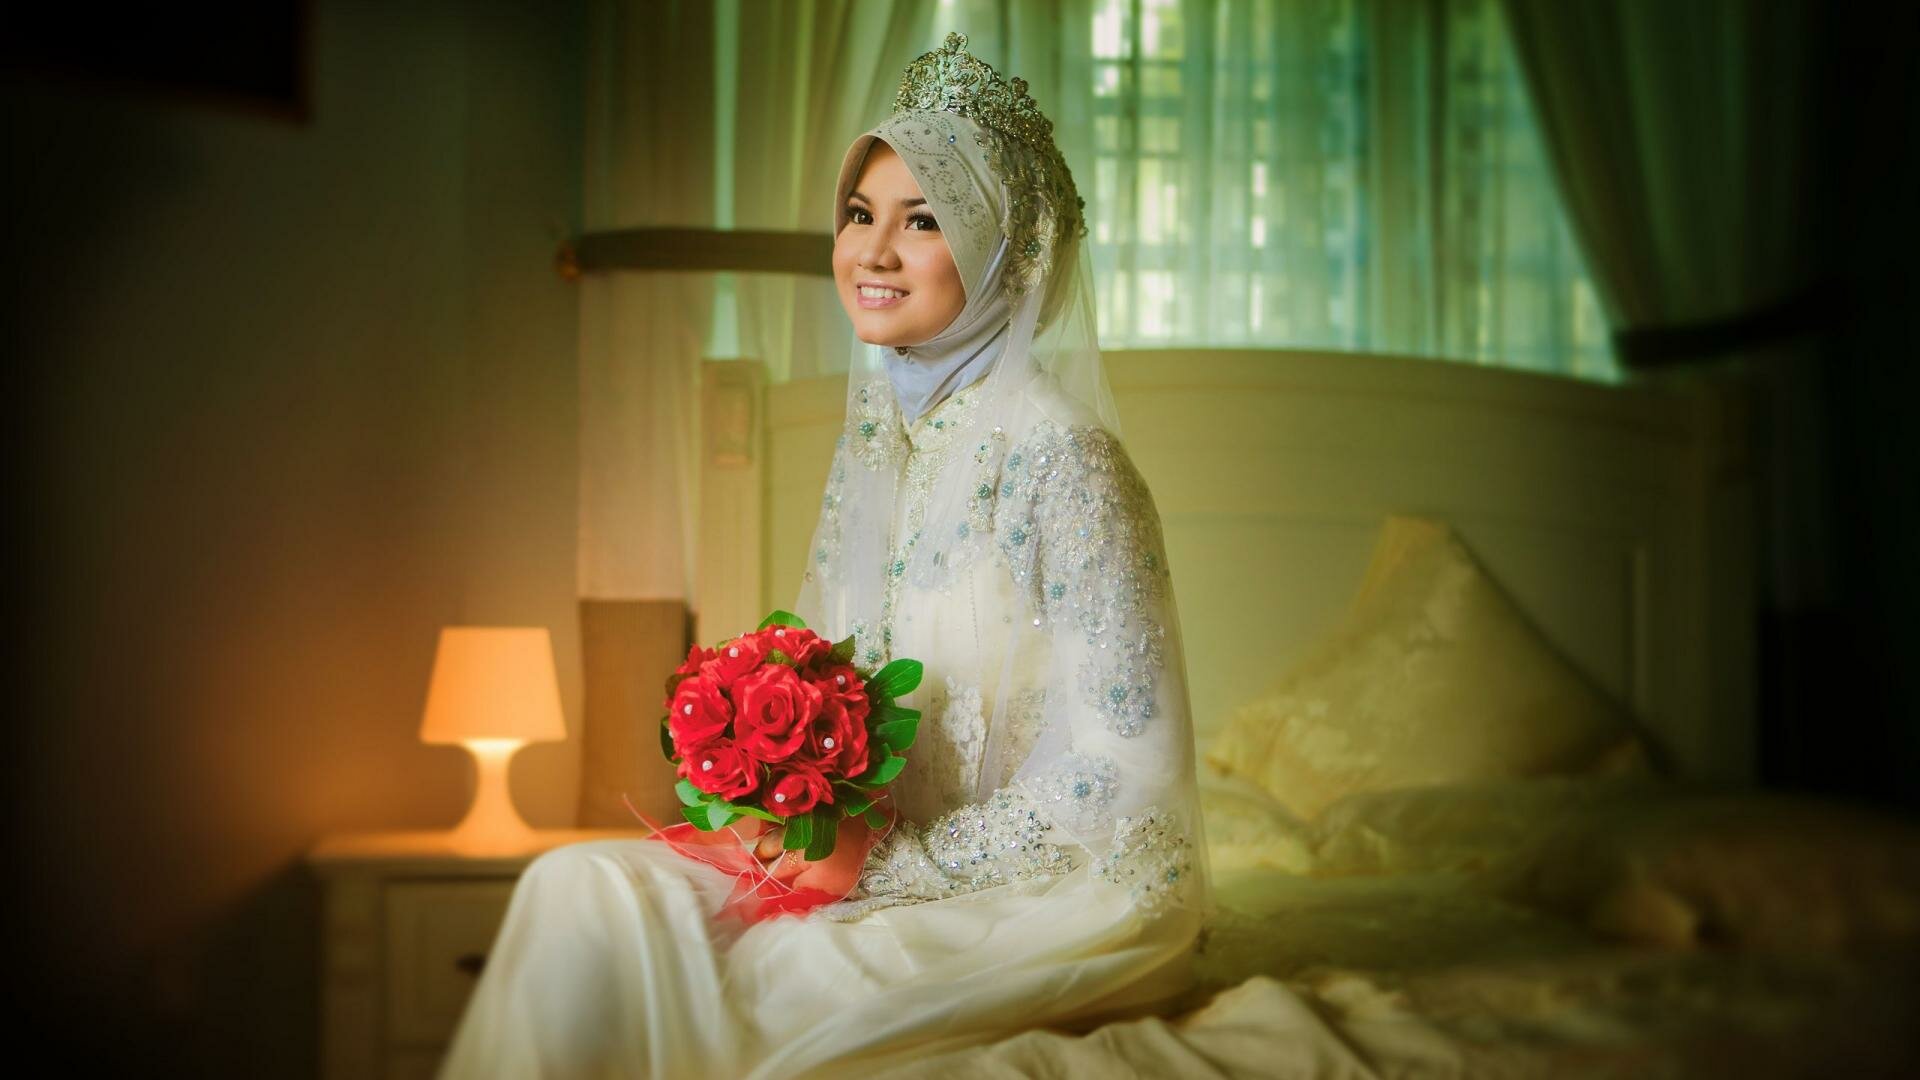 Islamic wedding dresses Photo - 10